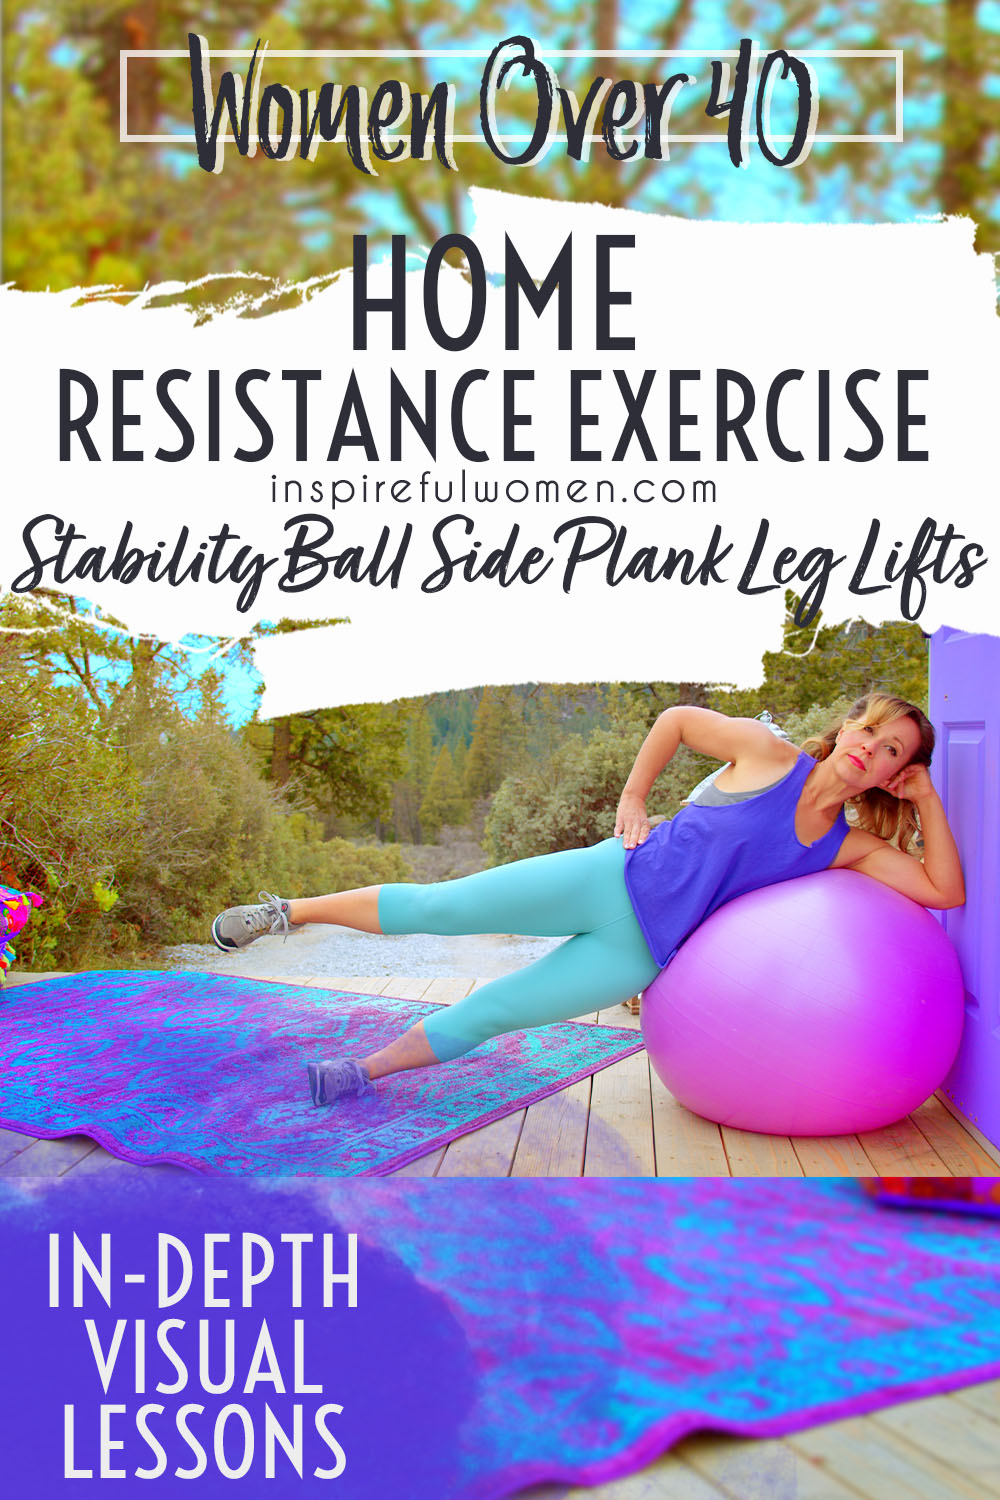 side-plank-leg-raises-hip-abduction-glutes-resistance-exercise-female-over-40